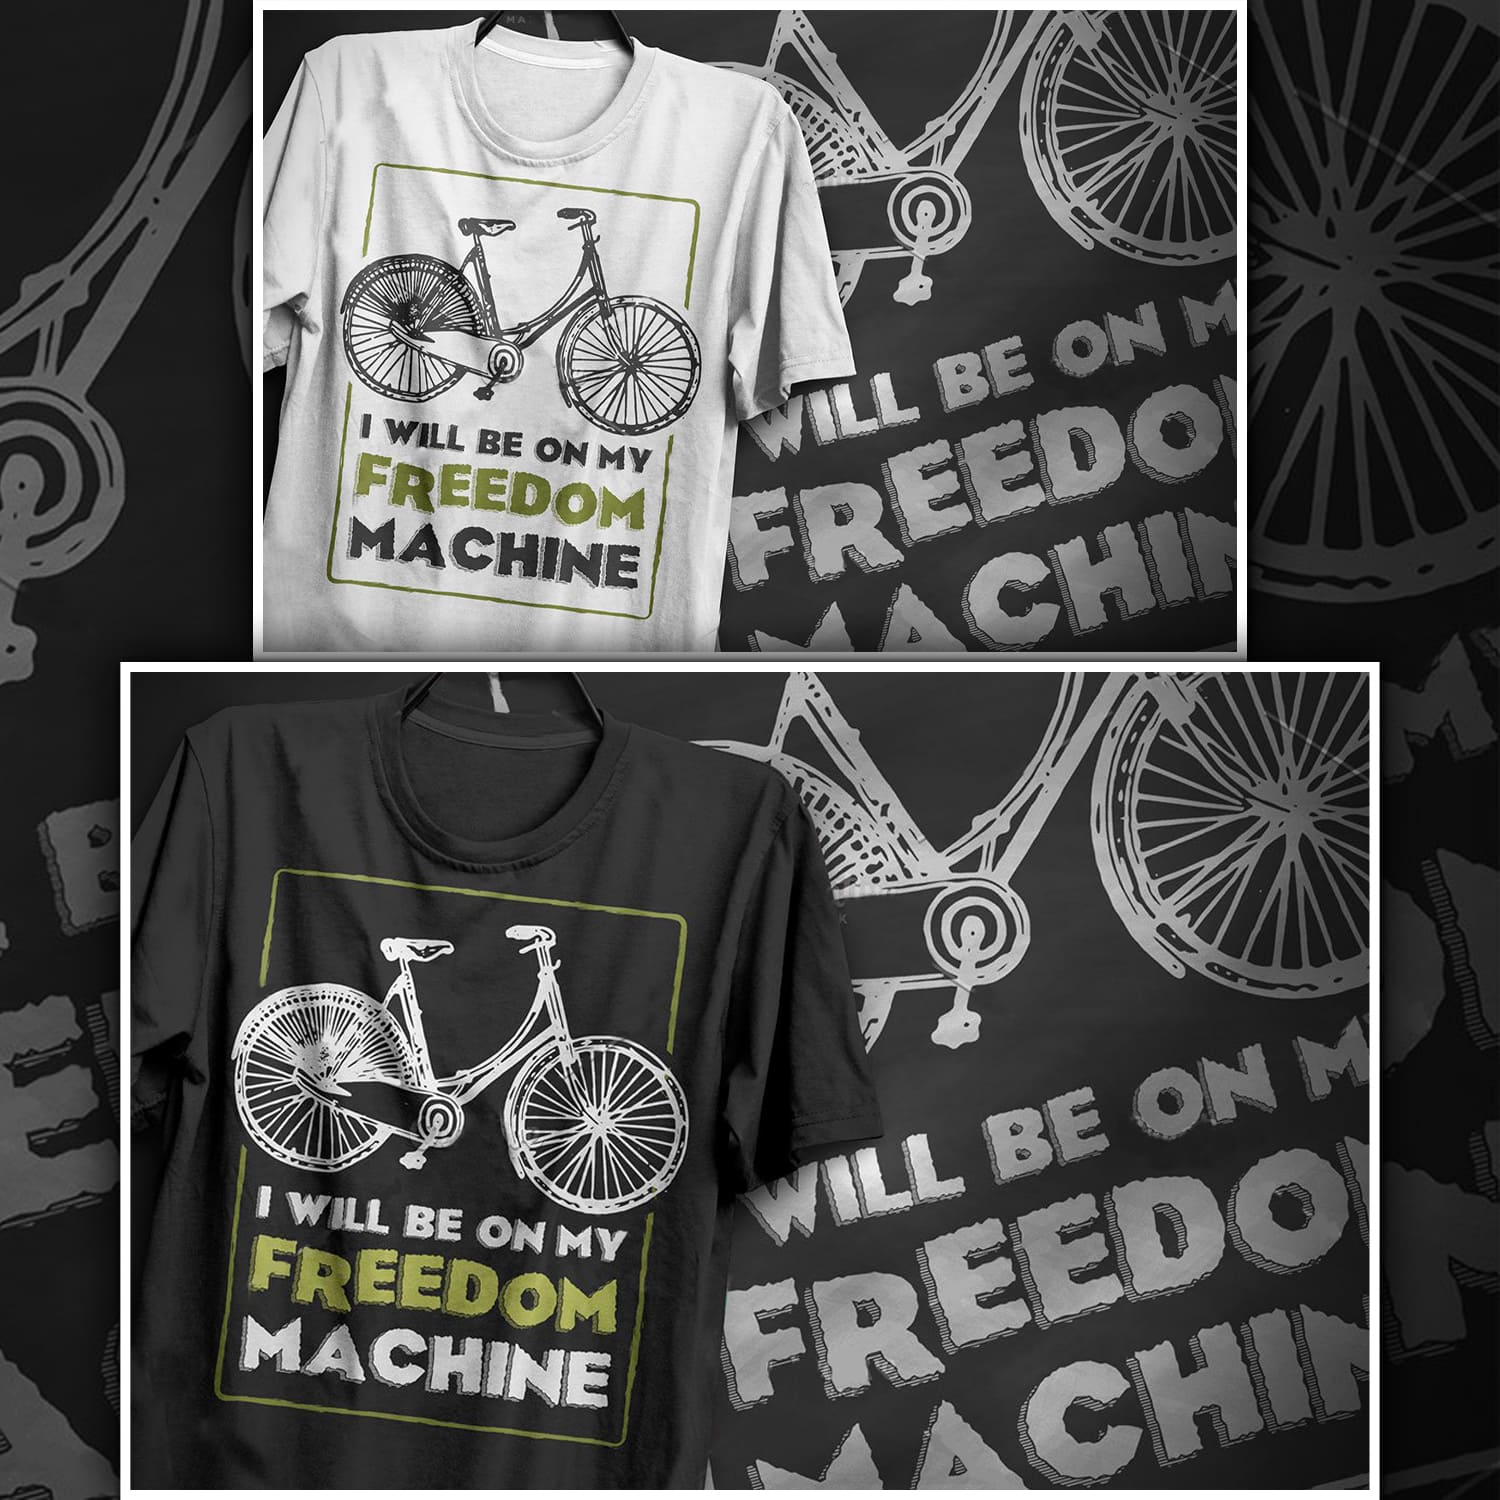 Freedom machine - T-Shirt Design Cover.